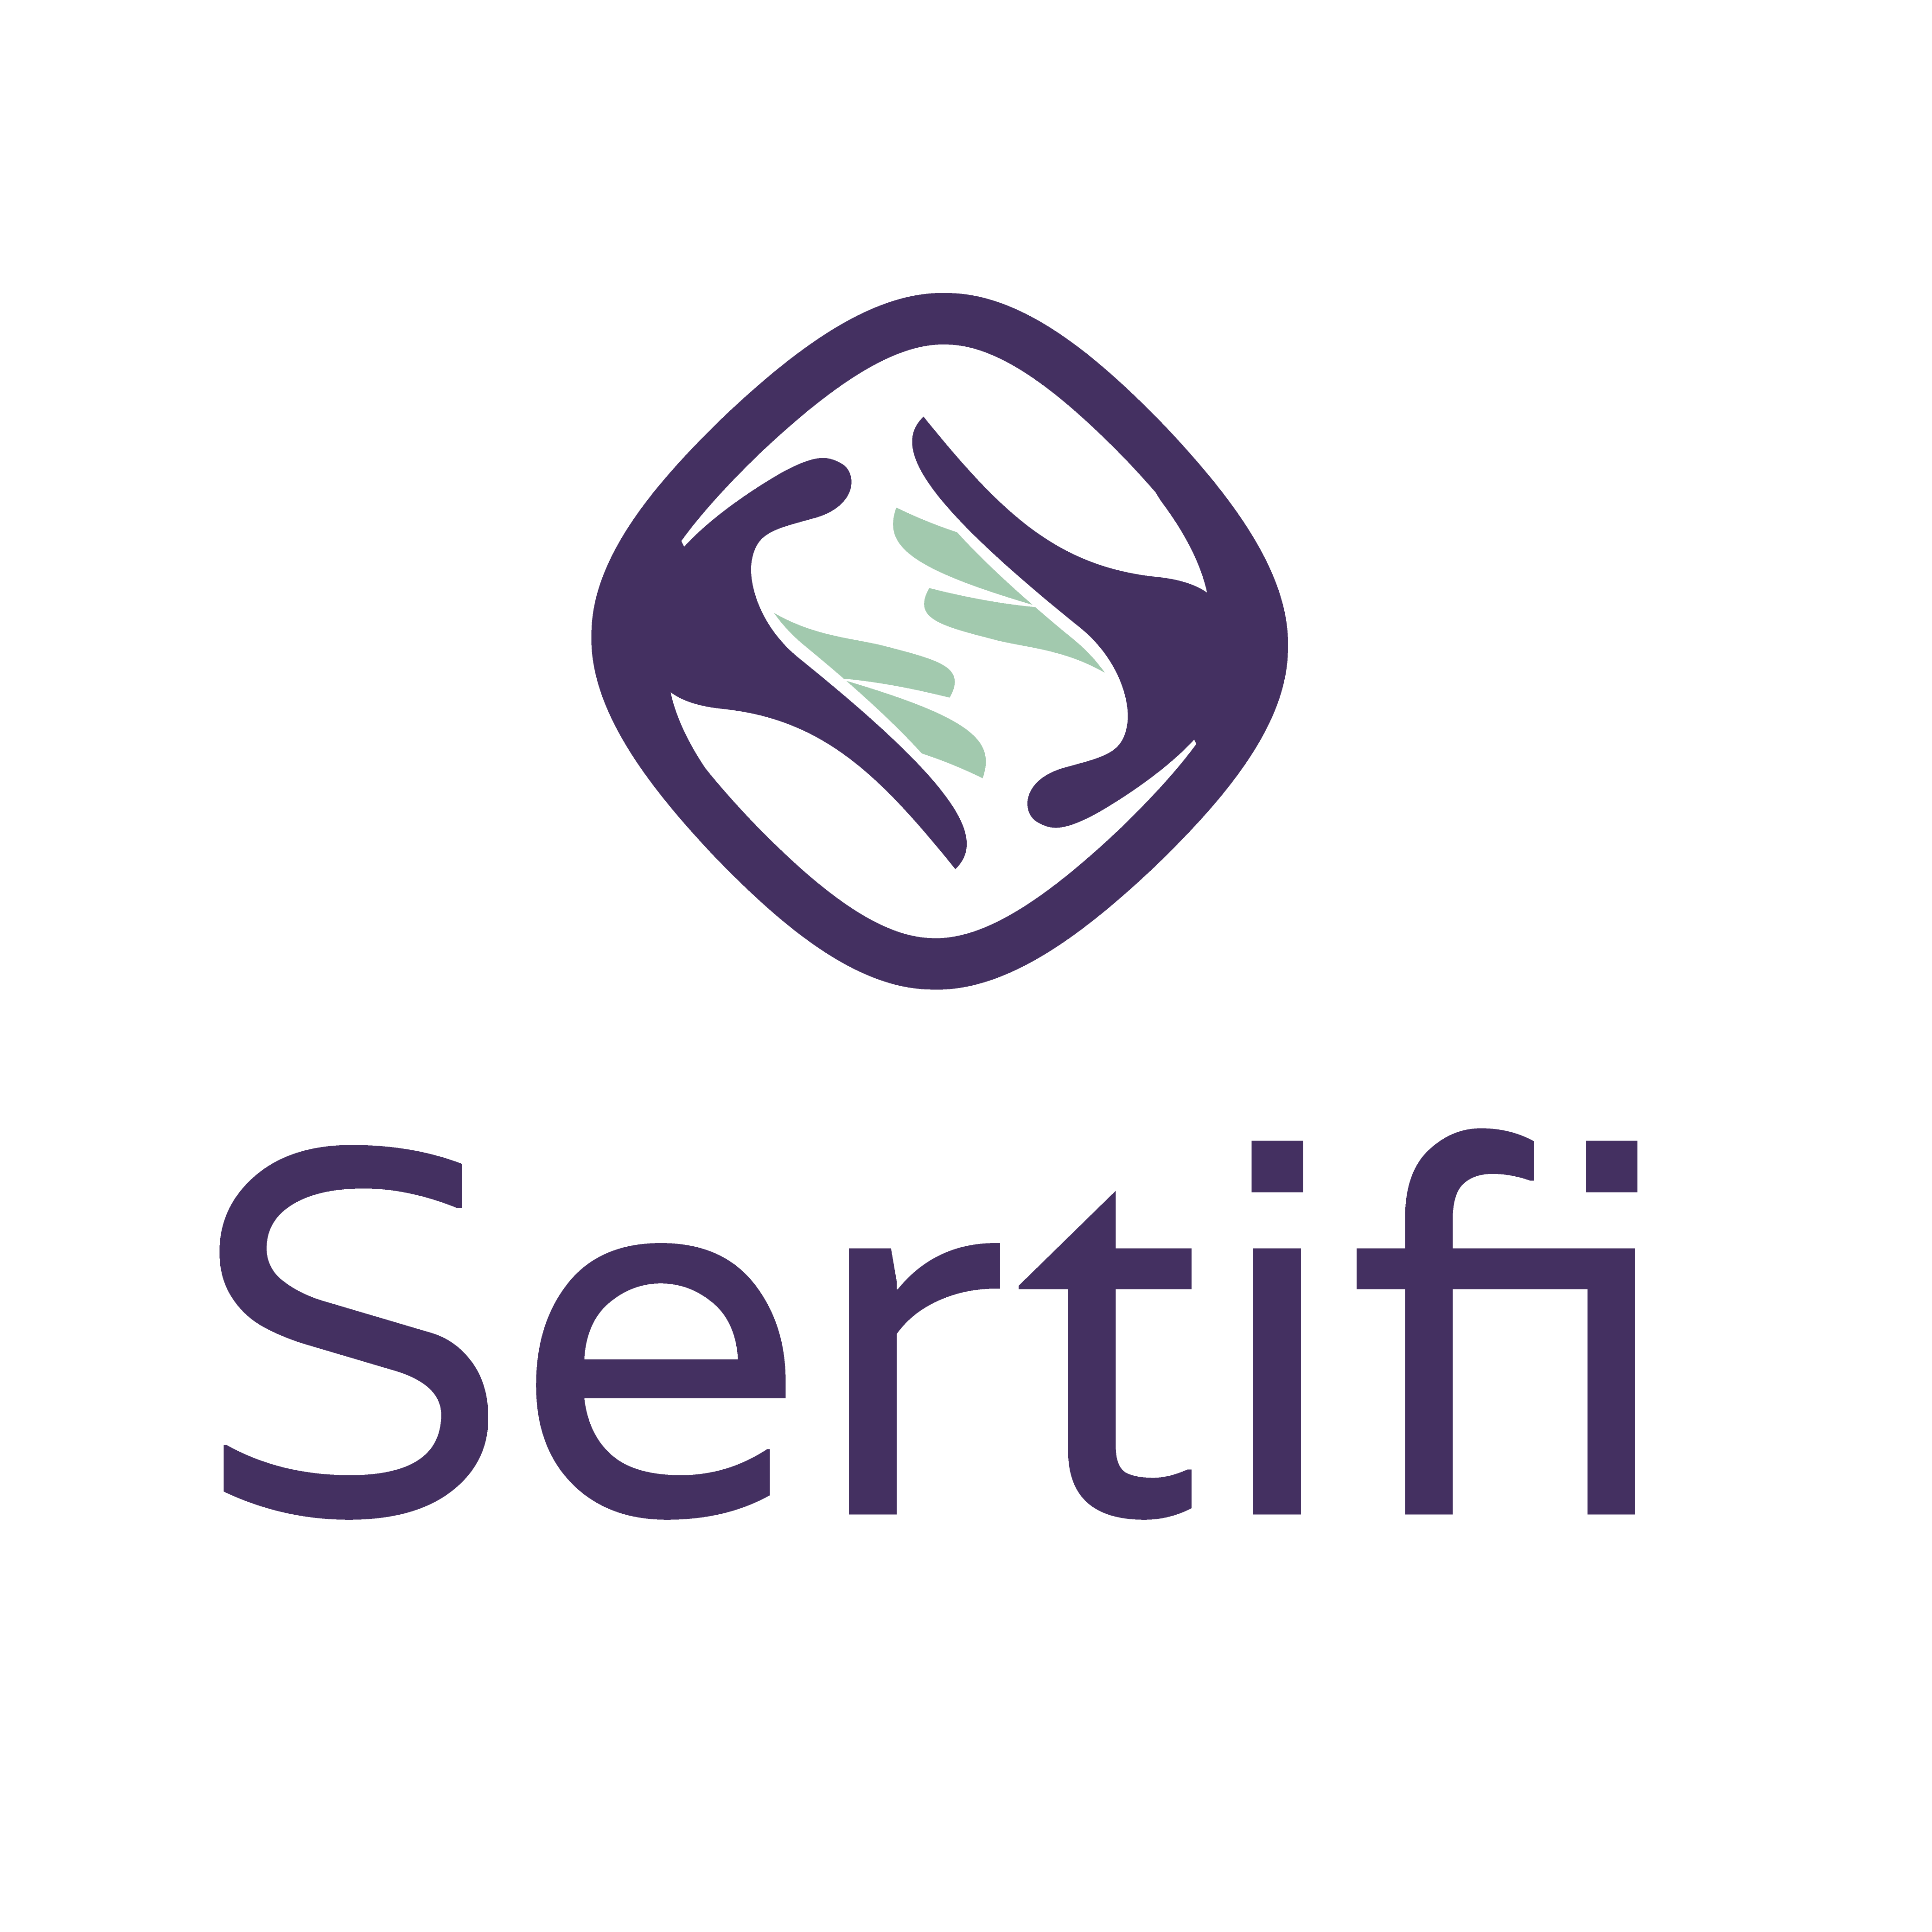 Infor and Sertifi Pa